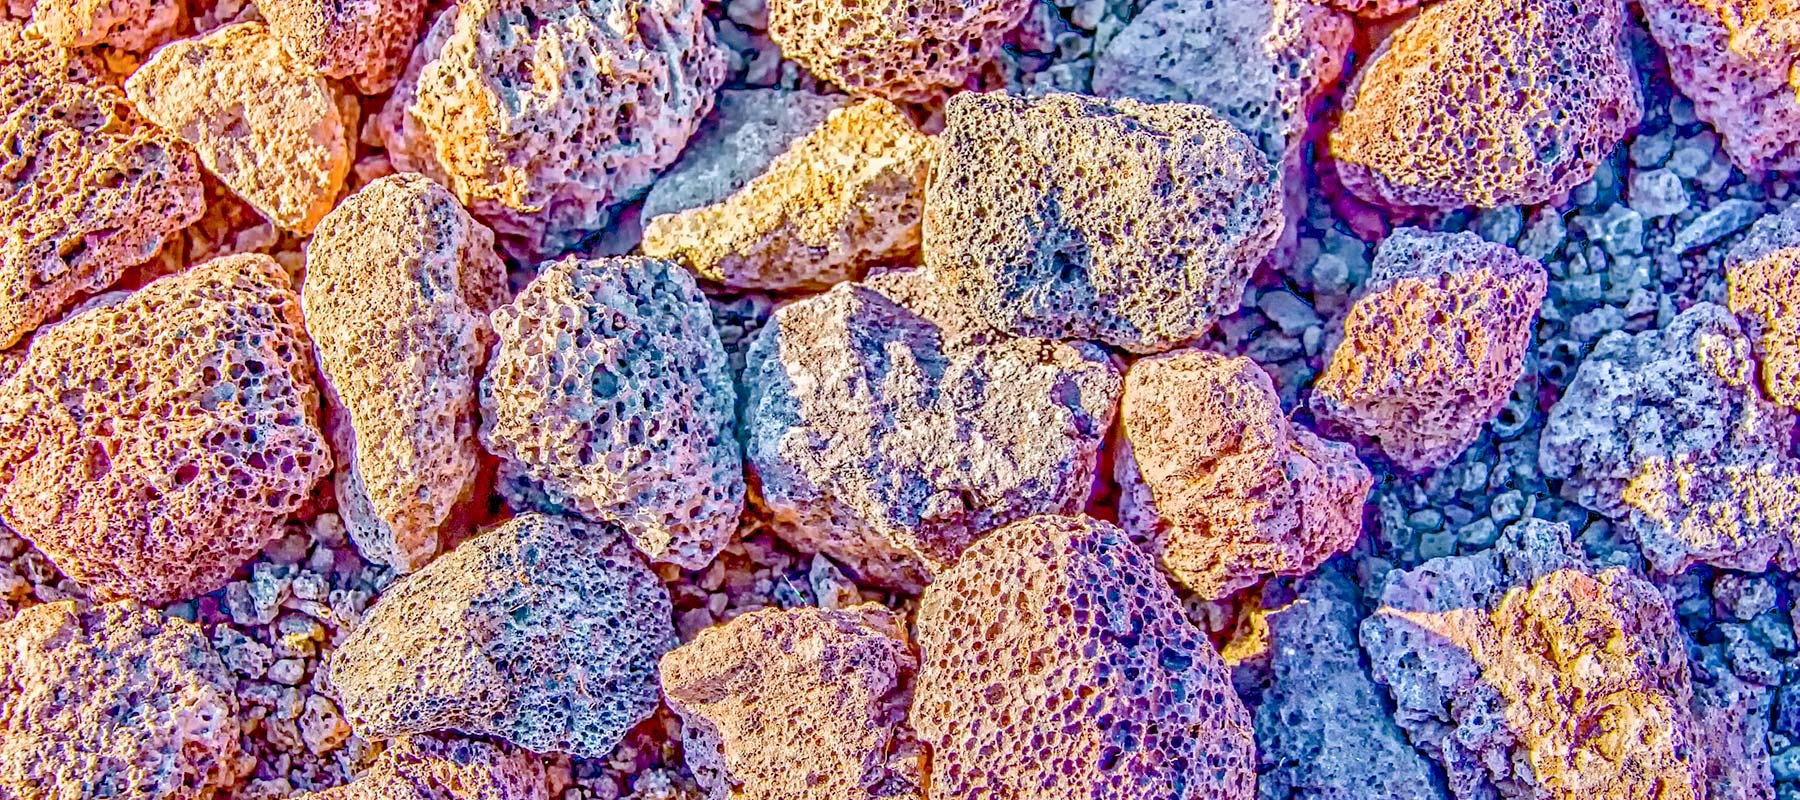 Pumice Stone - Volcanic Sand